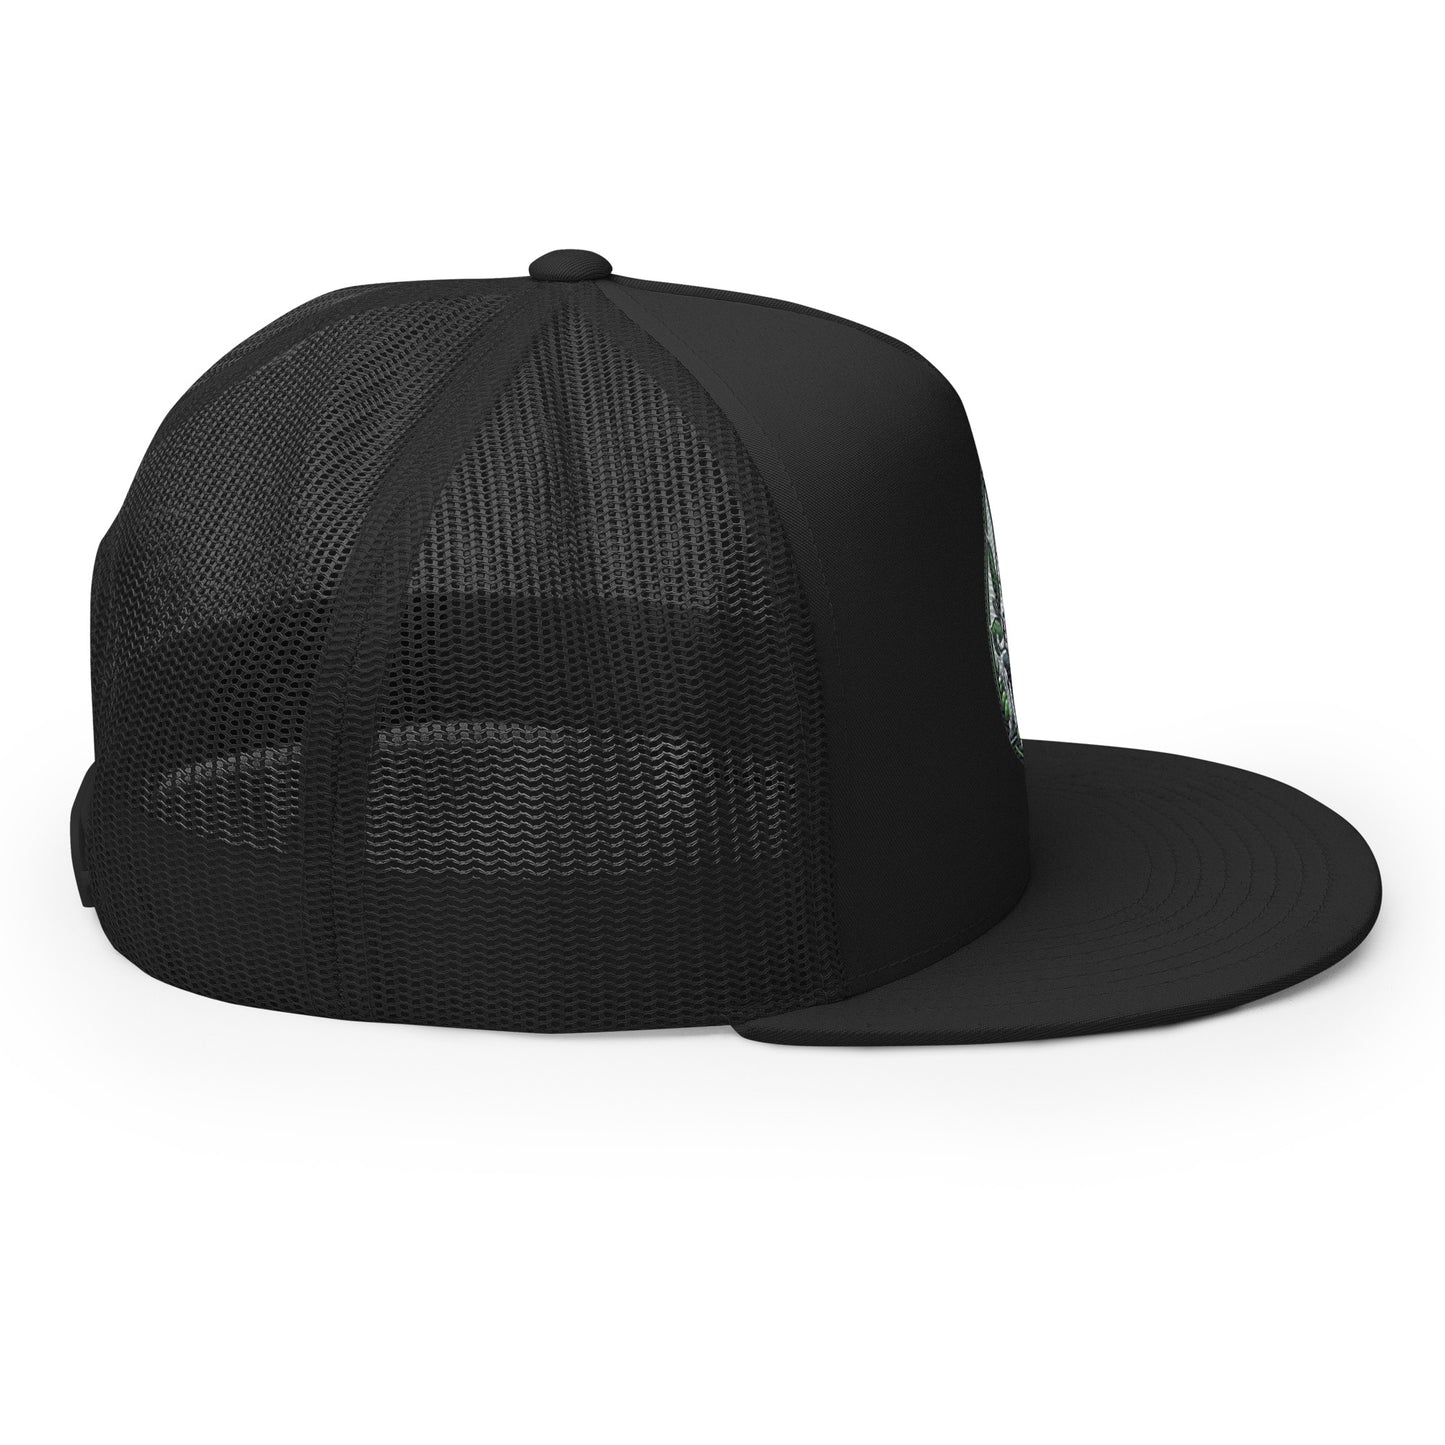 Vibrant Visions - Organic Health & Wellness - Classic Hat, Trucker Cap, Snap back hat